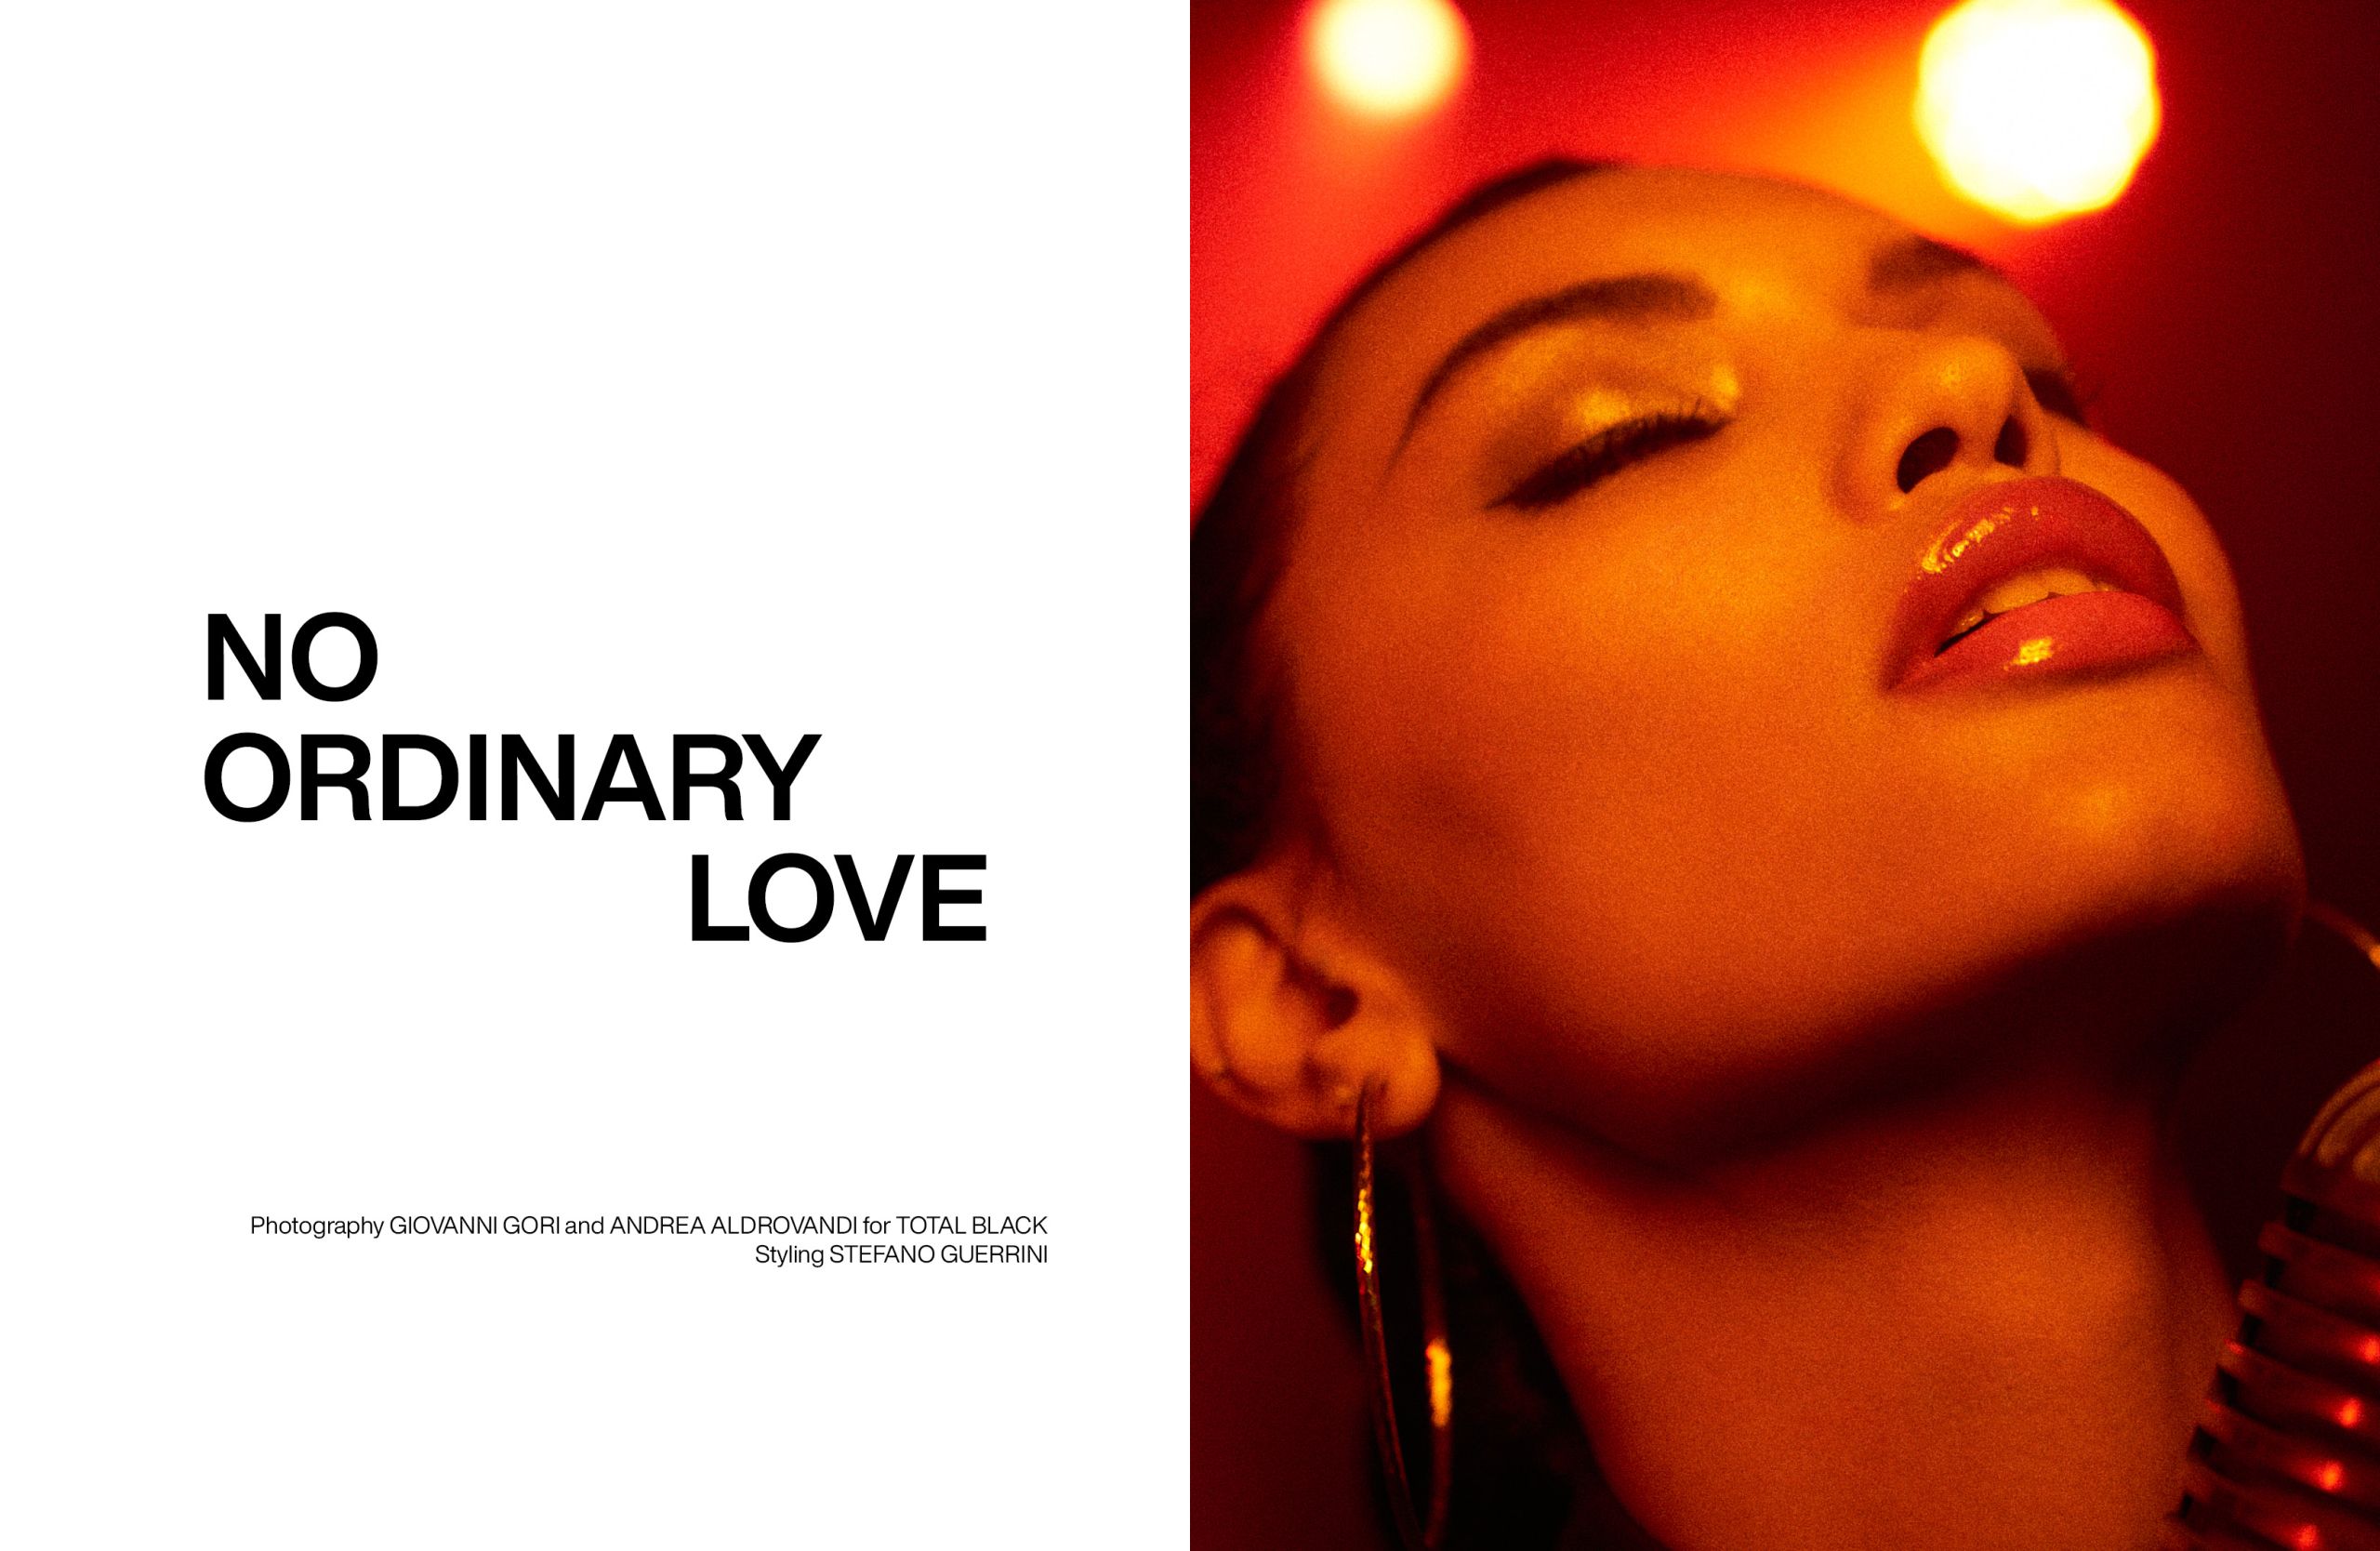 No ordinary love - Editorial on Dscene